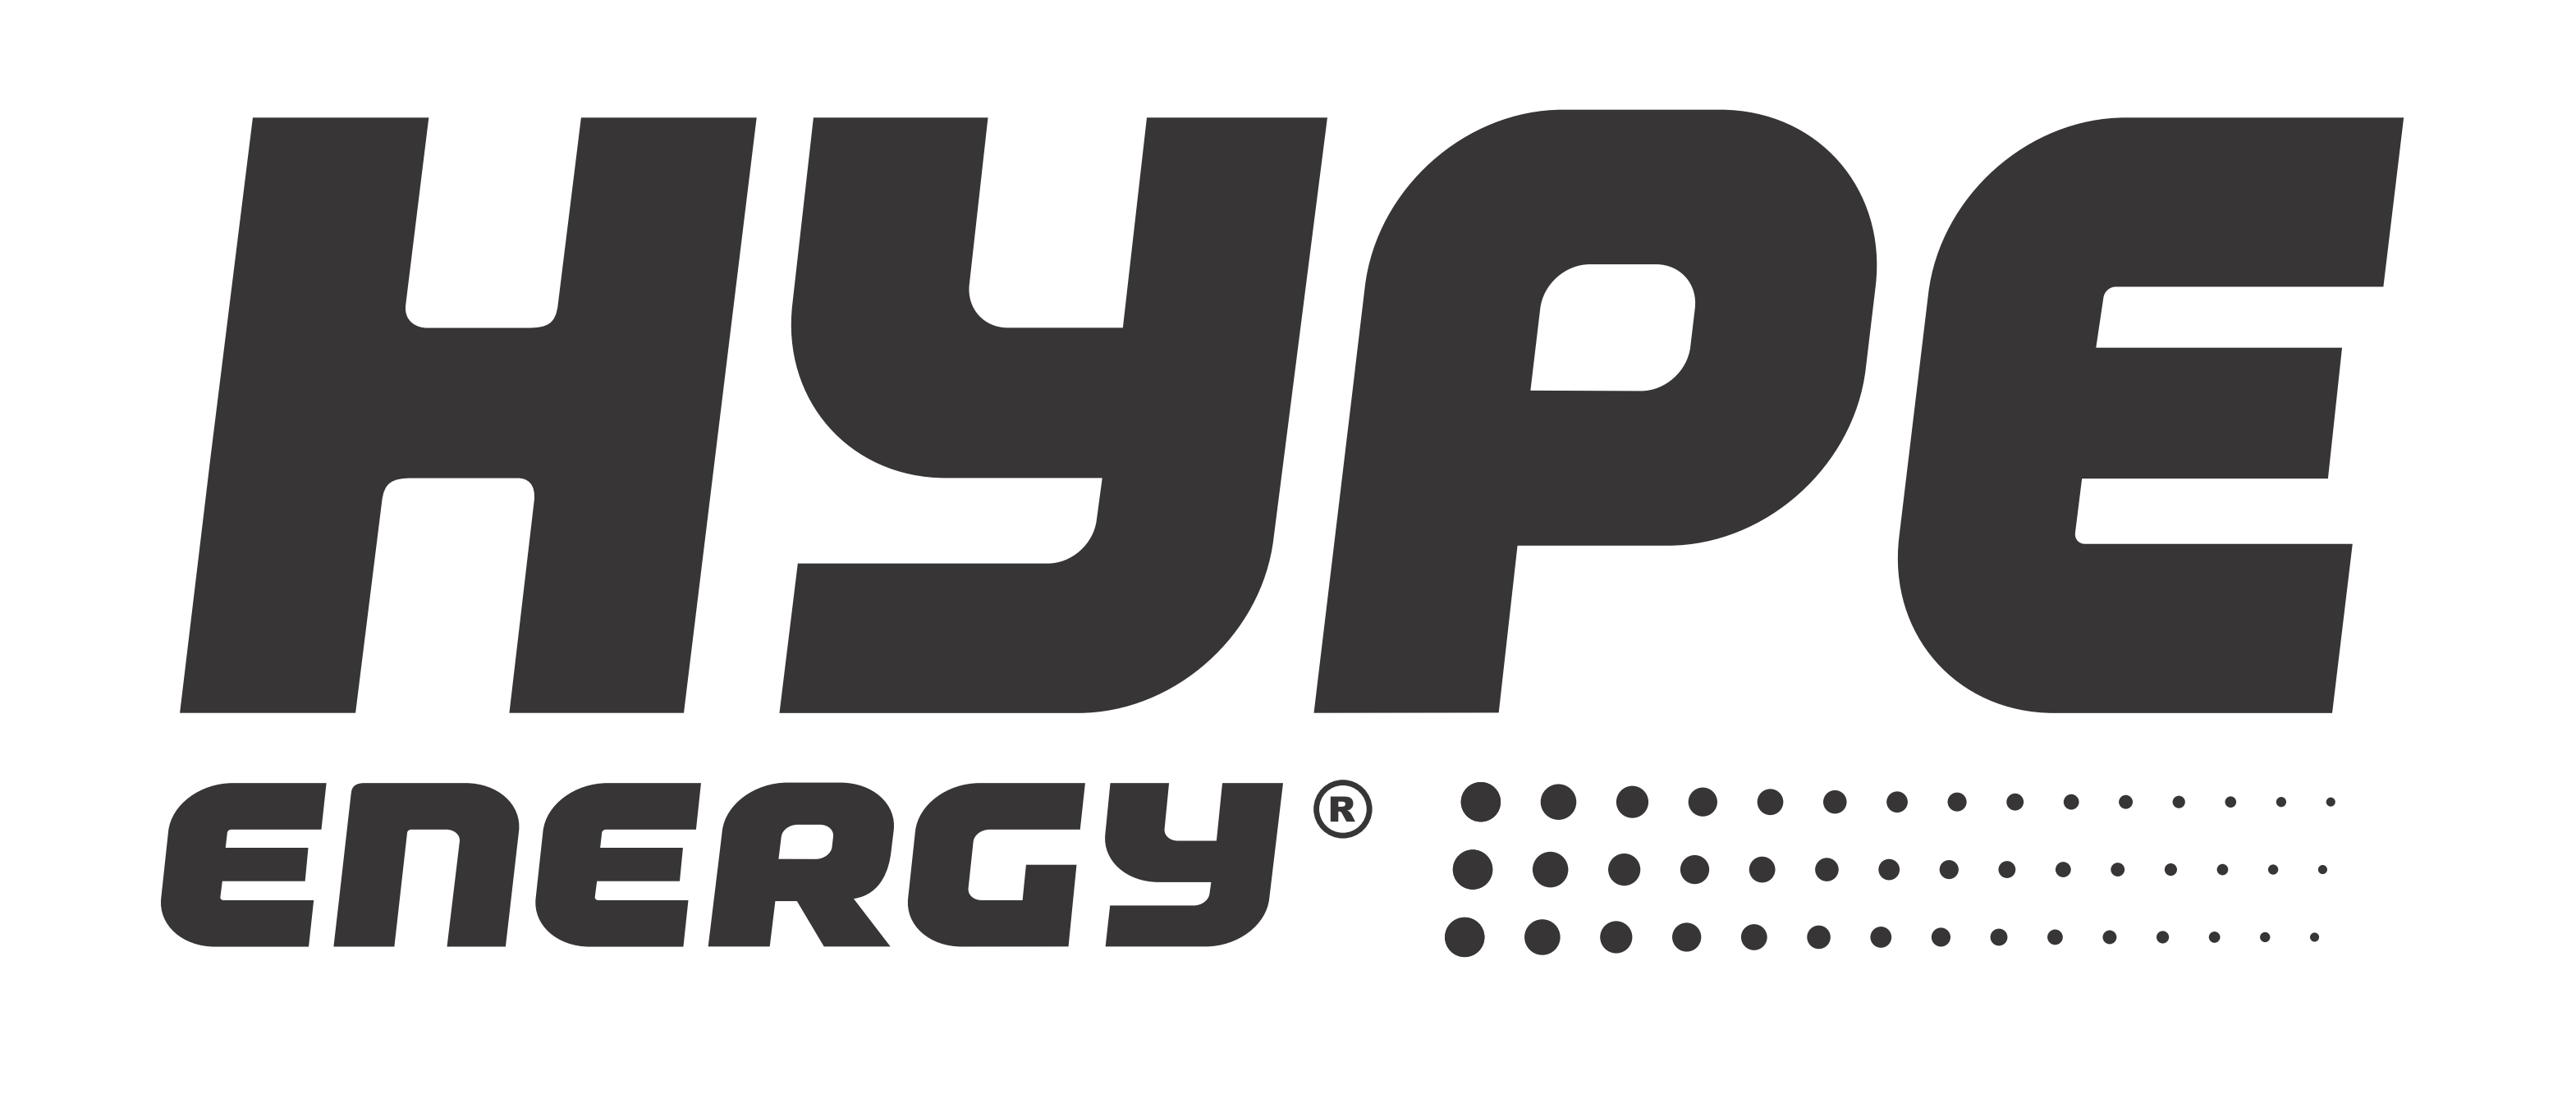 Надпись лит энерджи. Hype логотип. Energy логотип. Хайп Энерджи. Energy Drink логотип.